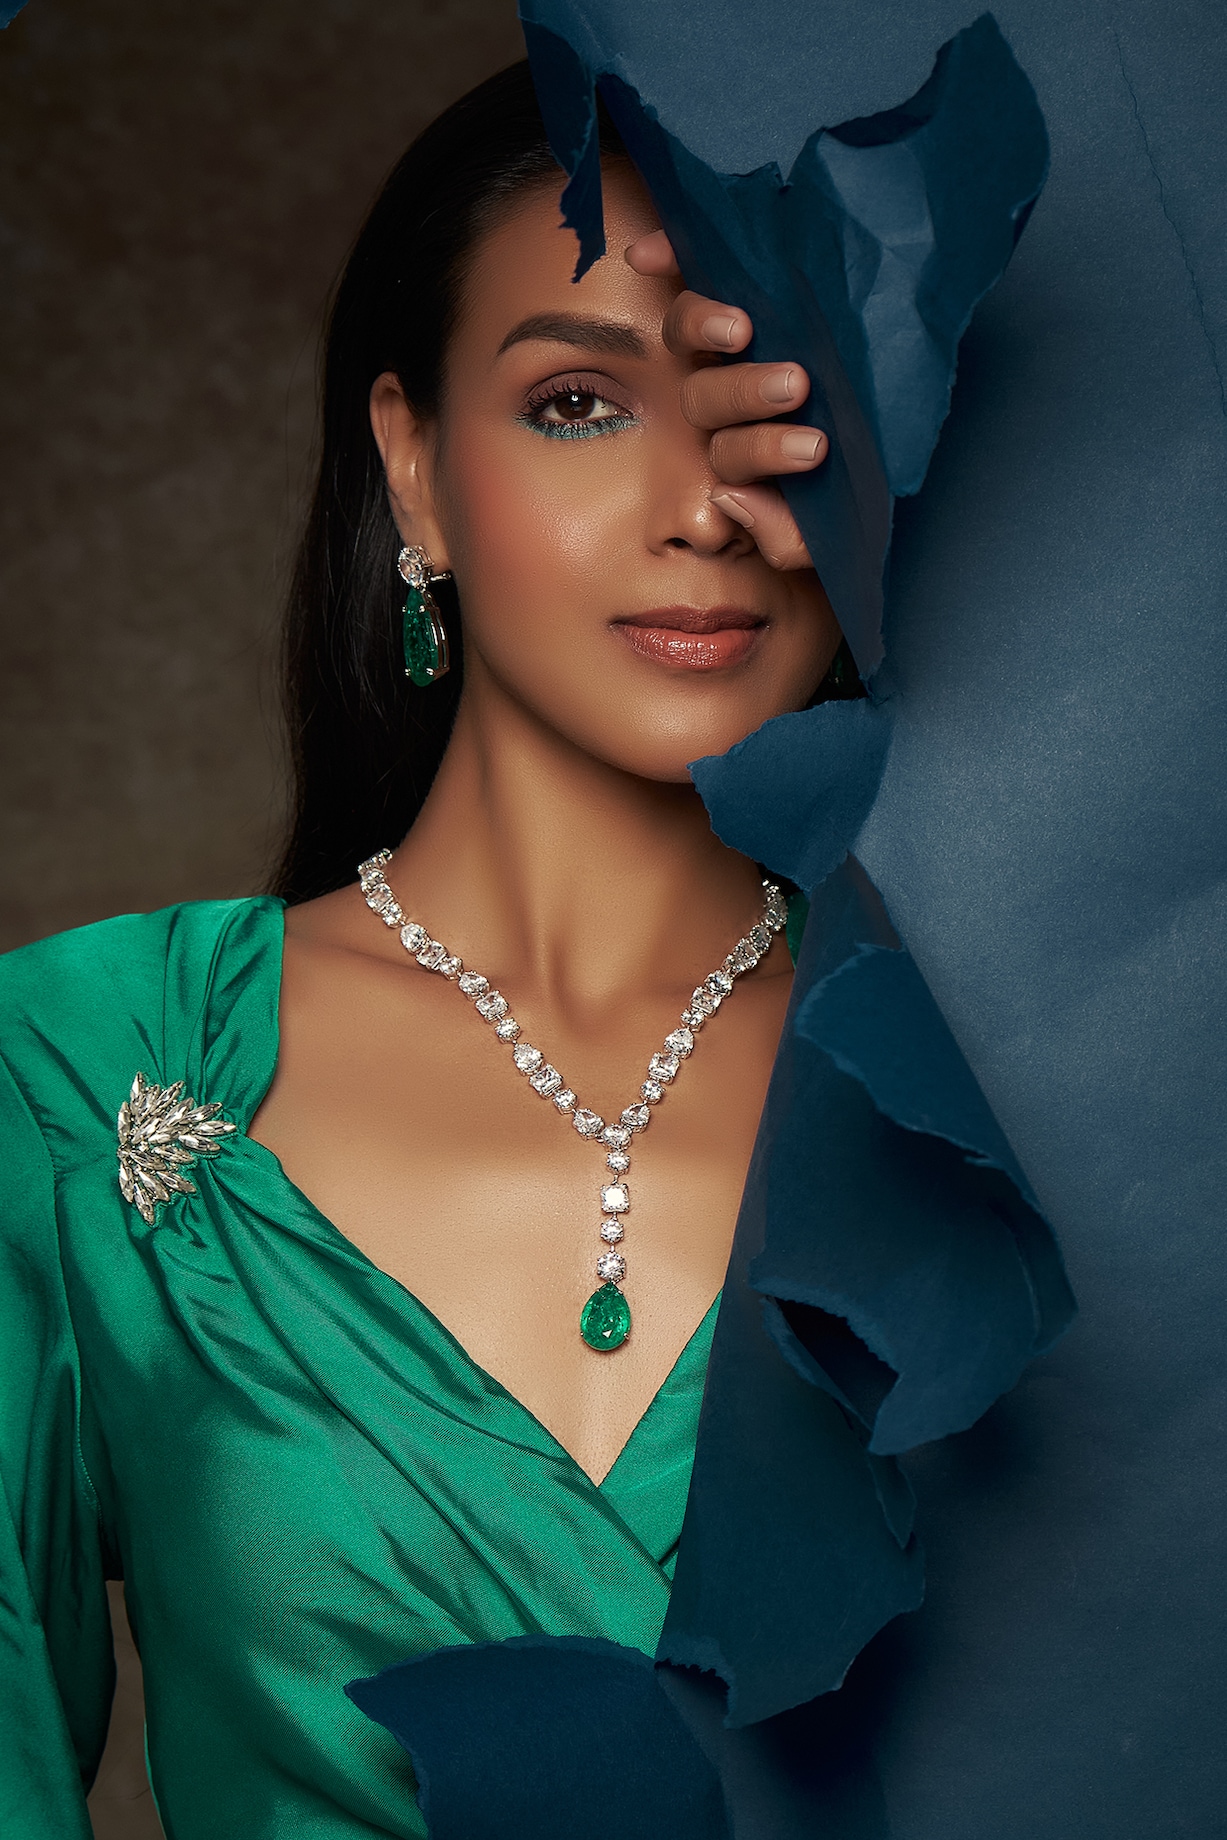 Mon Tresor Semi Precious Emerald Necklace Set